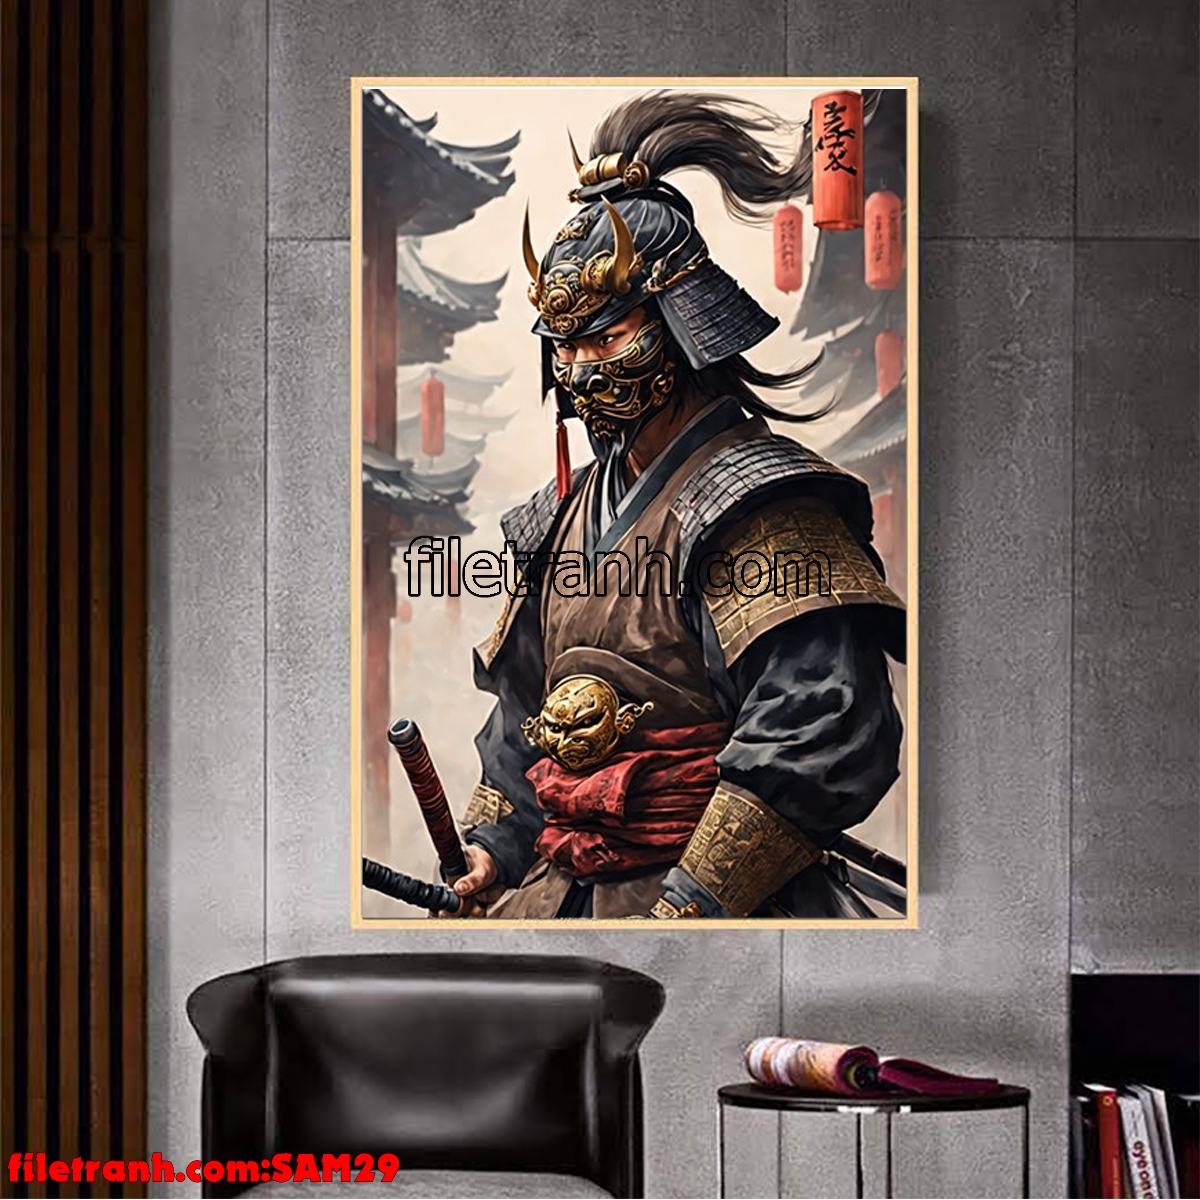 https://filetranh.com/tuong-nen/file-tranh-samurai-vo-si-nhat-ban-sam29.html